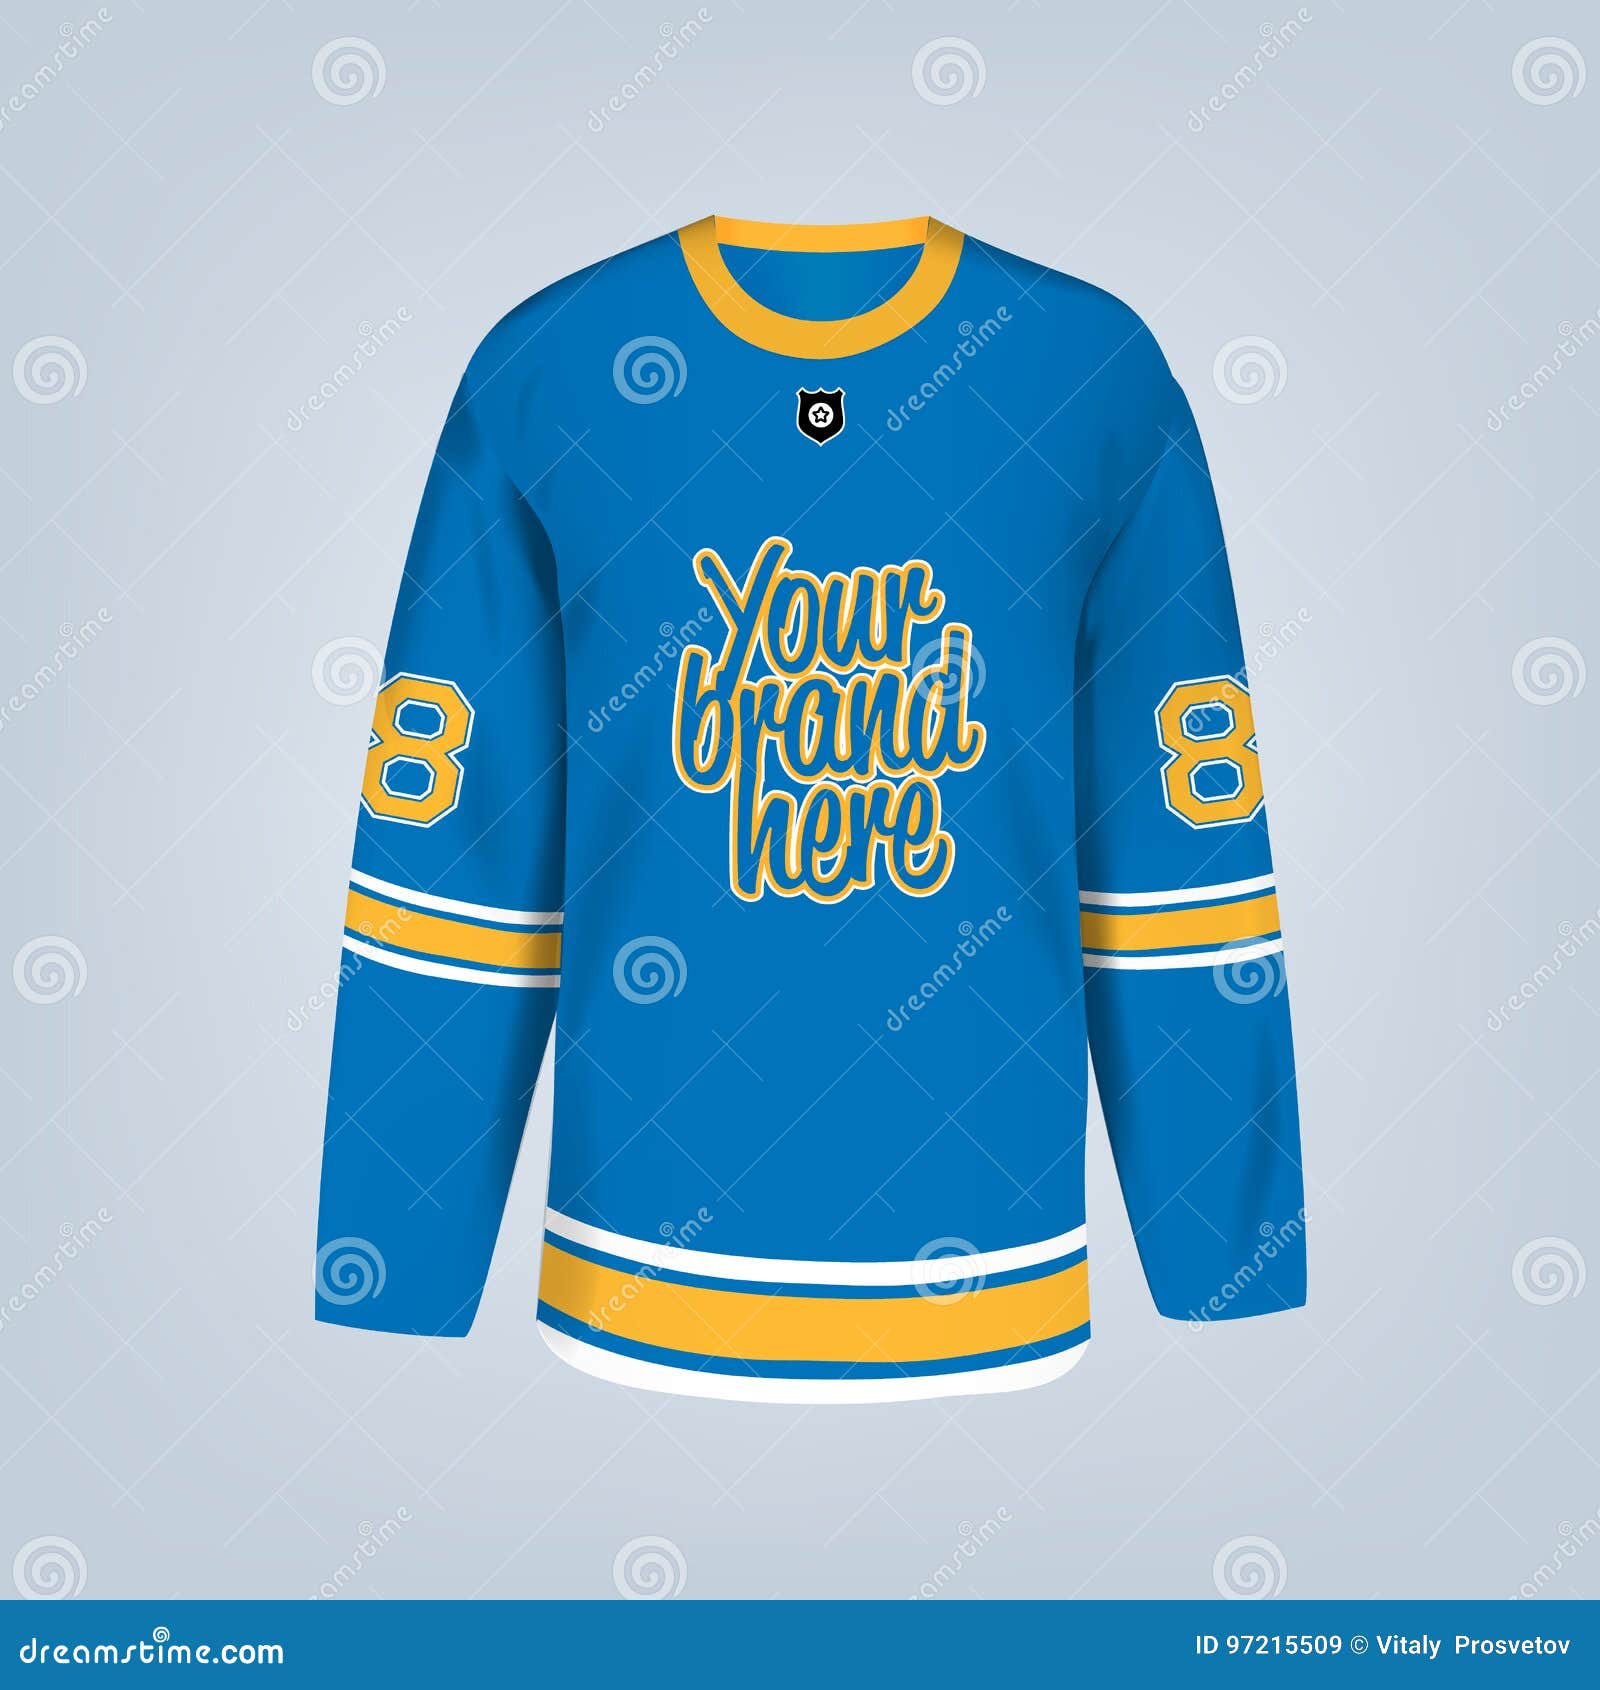 Hockey t shirt design Vectors & Illustrations for Free Download